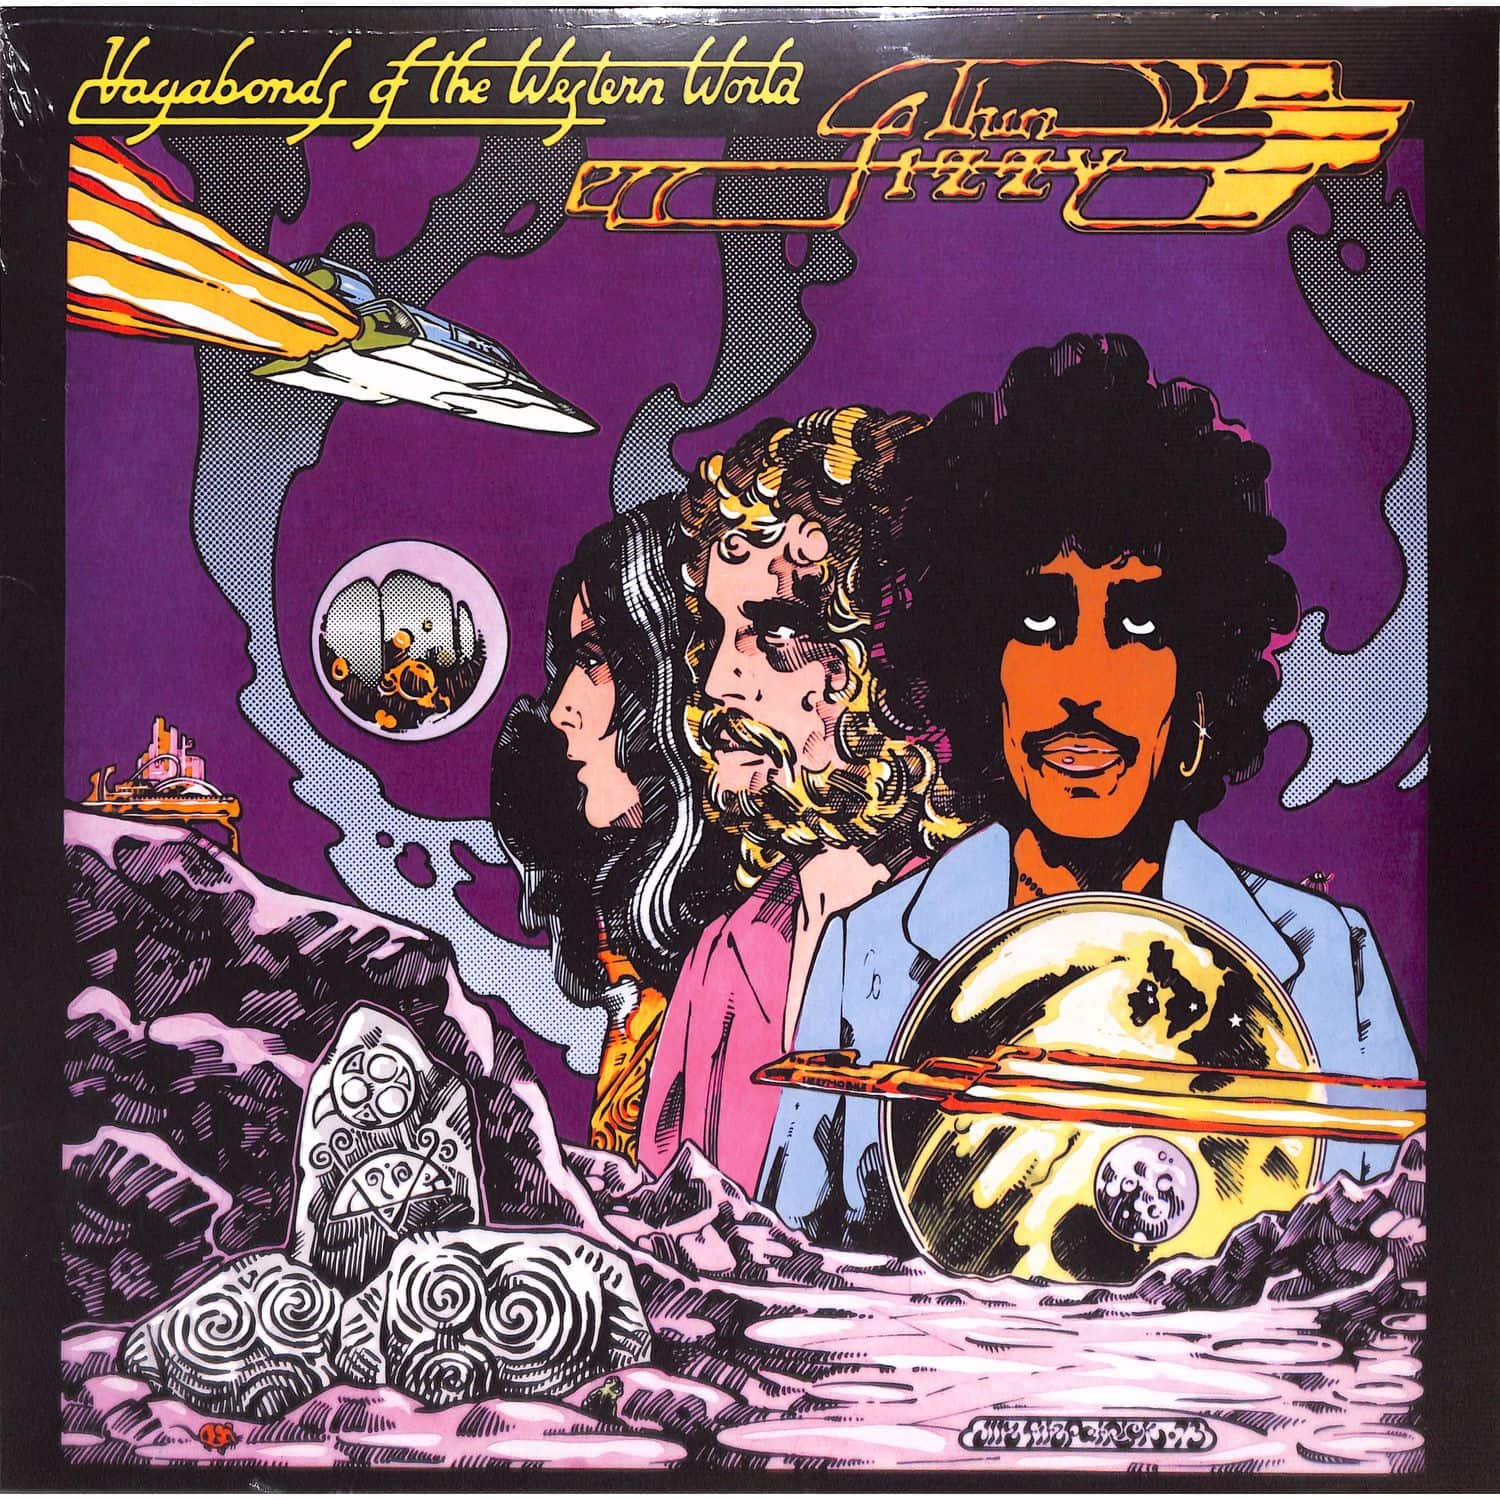 Thin Lizzy - VAGABONDS OF THE WESTERN WORLD 